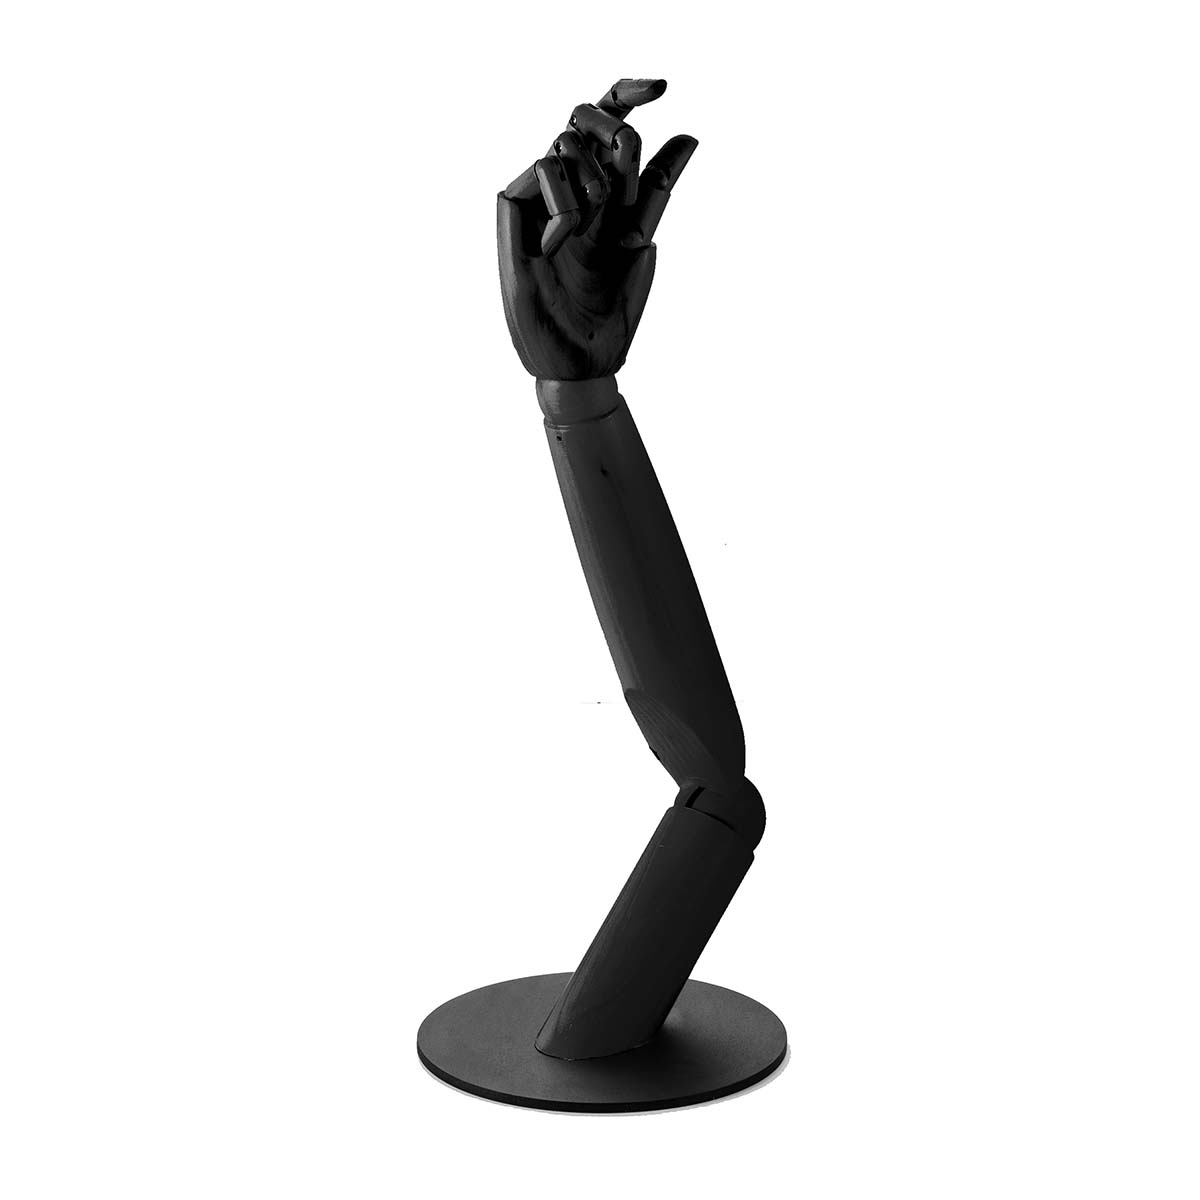 Tangla lighting - TLTL004BK - Table fixture wood long right arm - mat black - adjustable